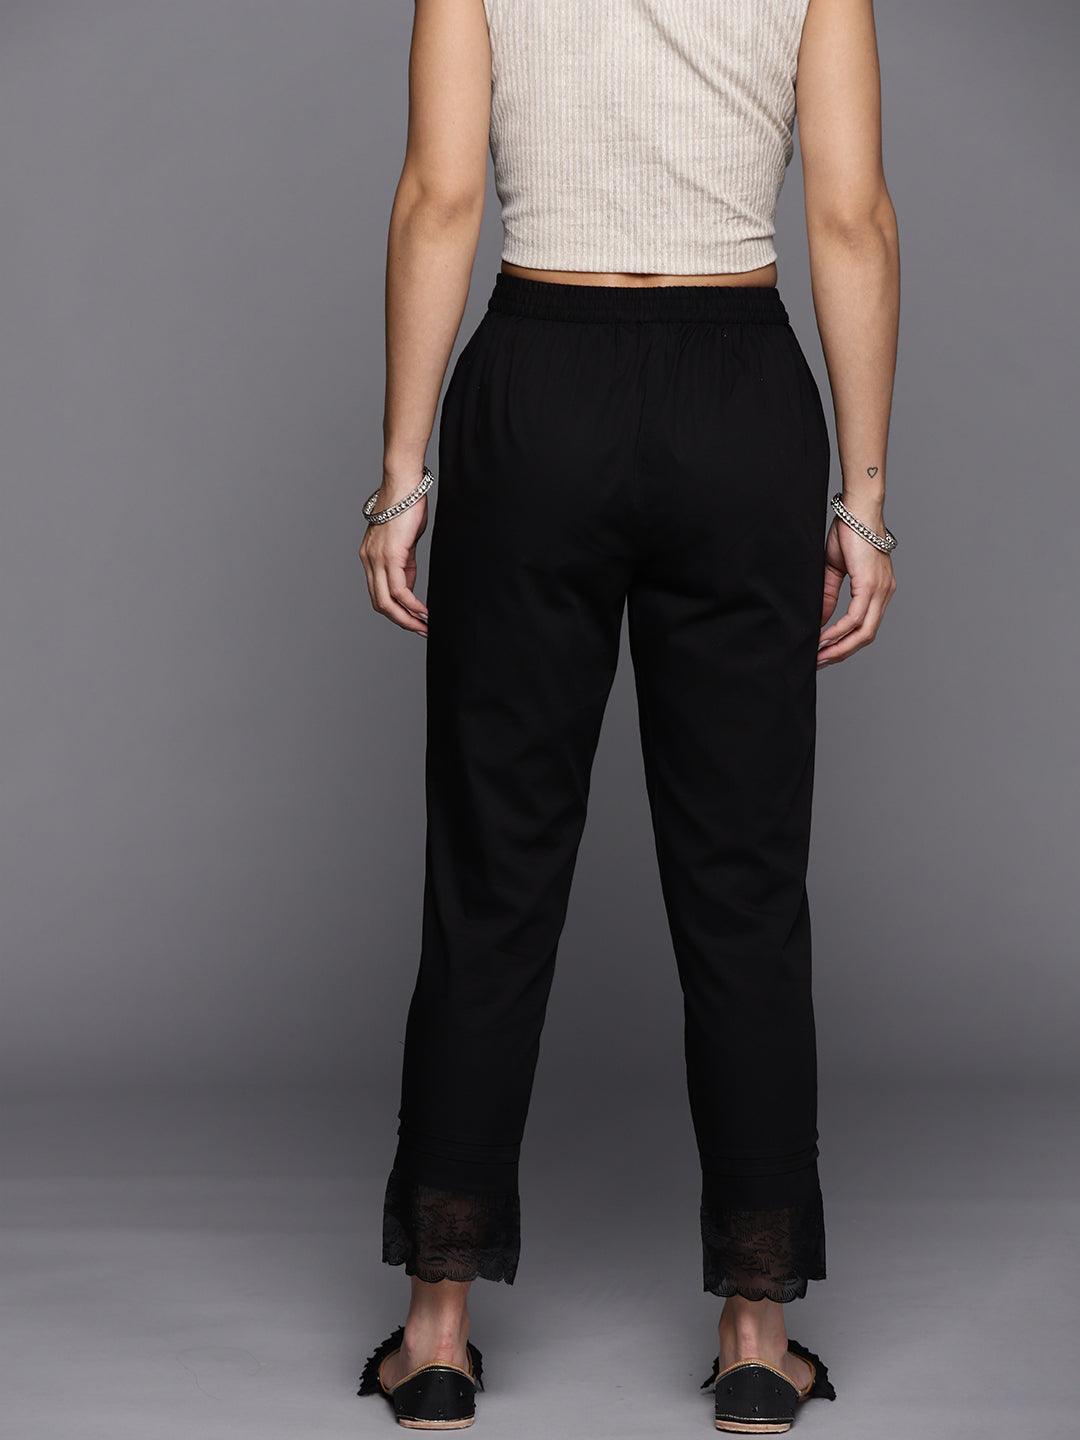 Black Solid Cotton Trousers - Libas